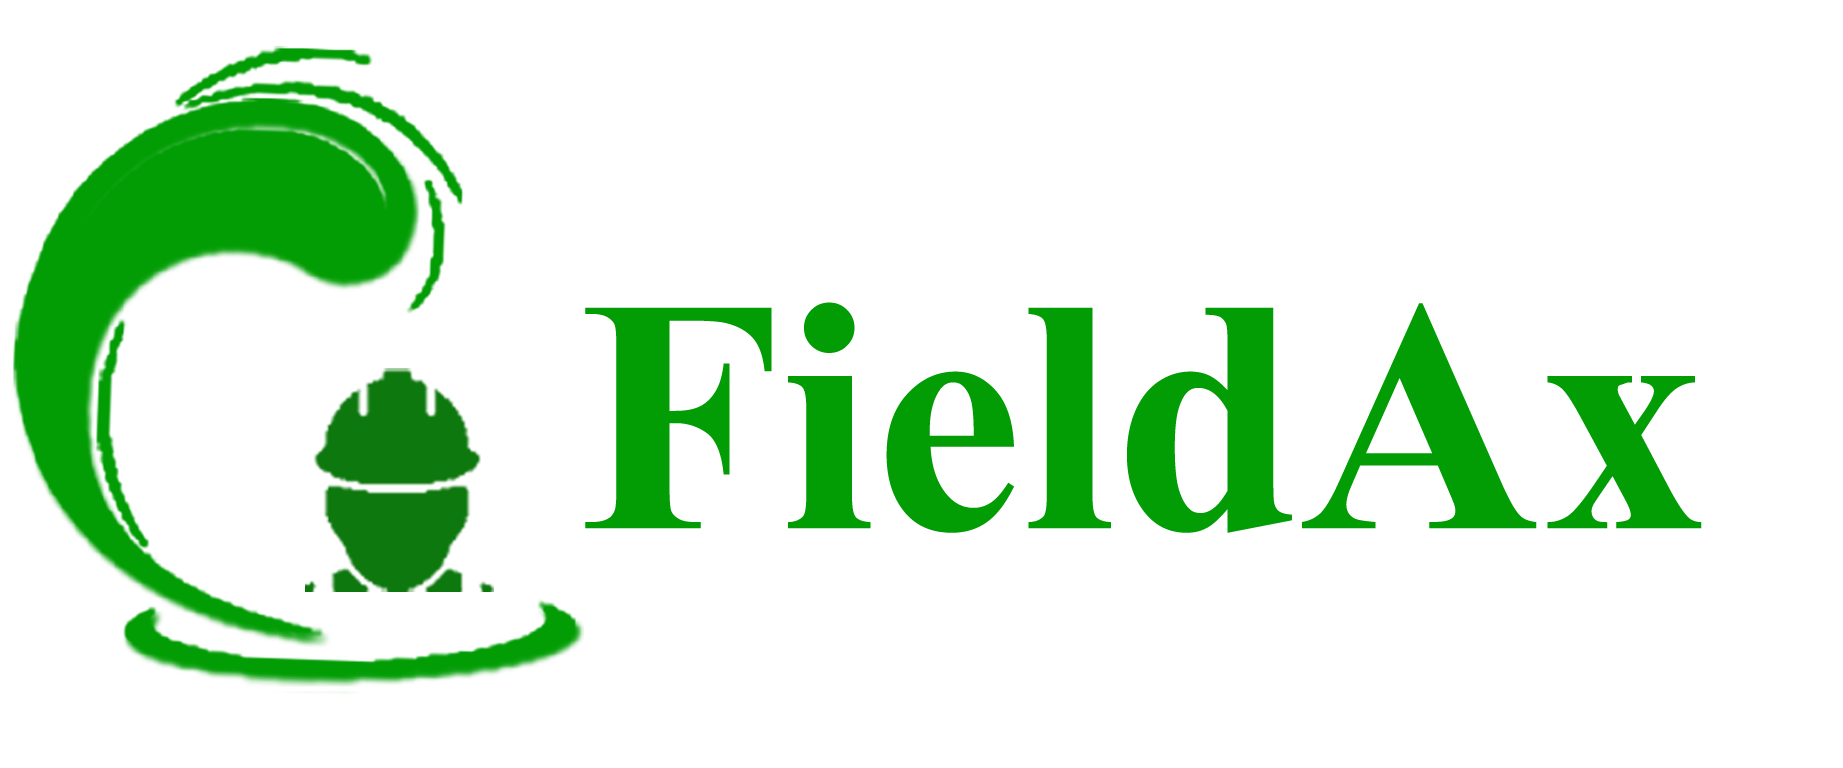 Field Service Software